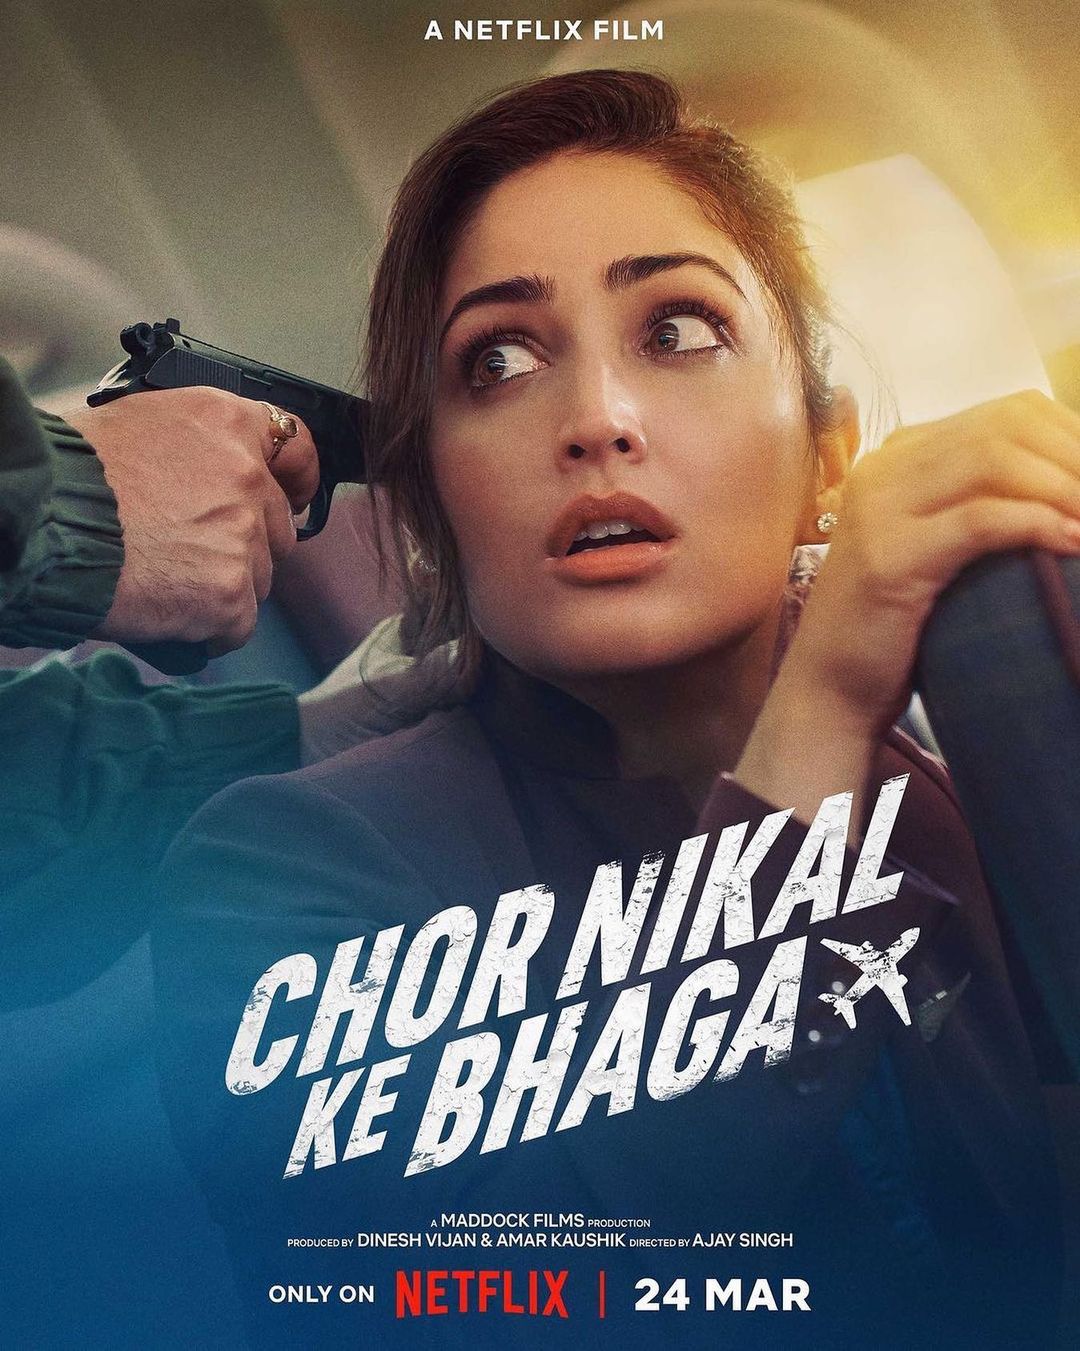 Chor nikal ke bhaagha review by cinehoppers